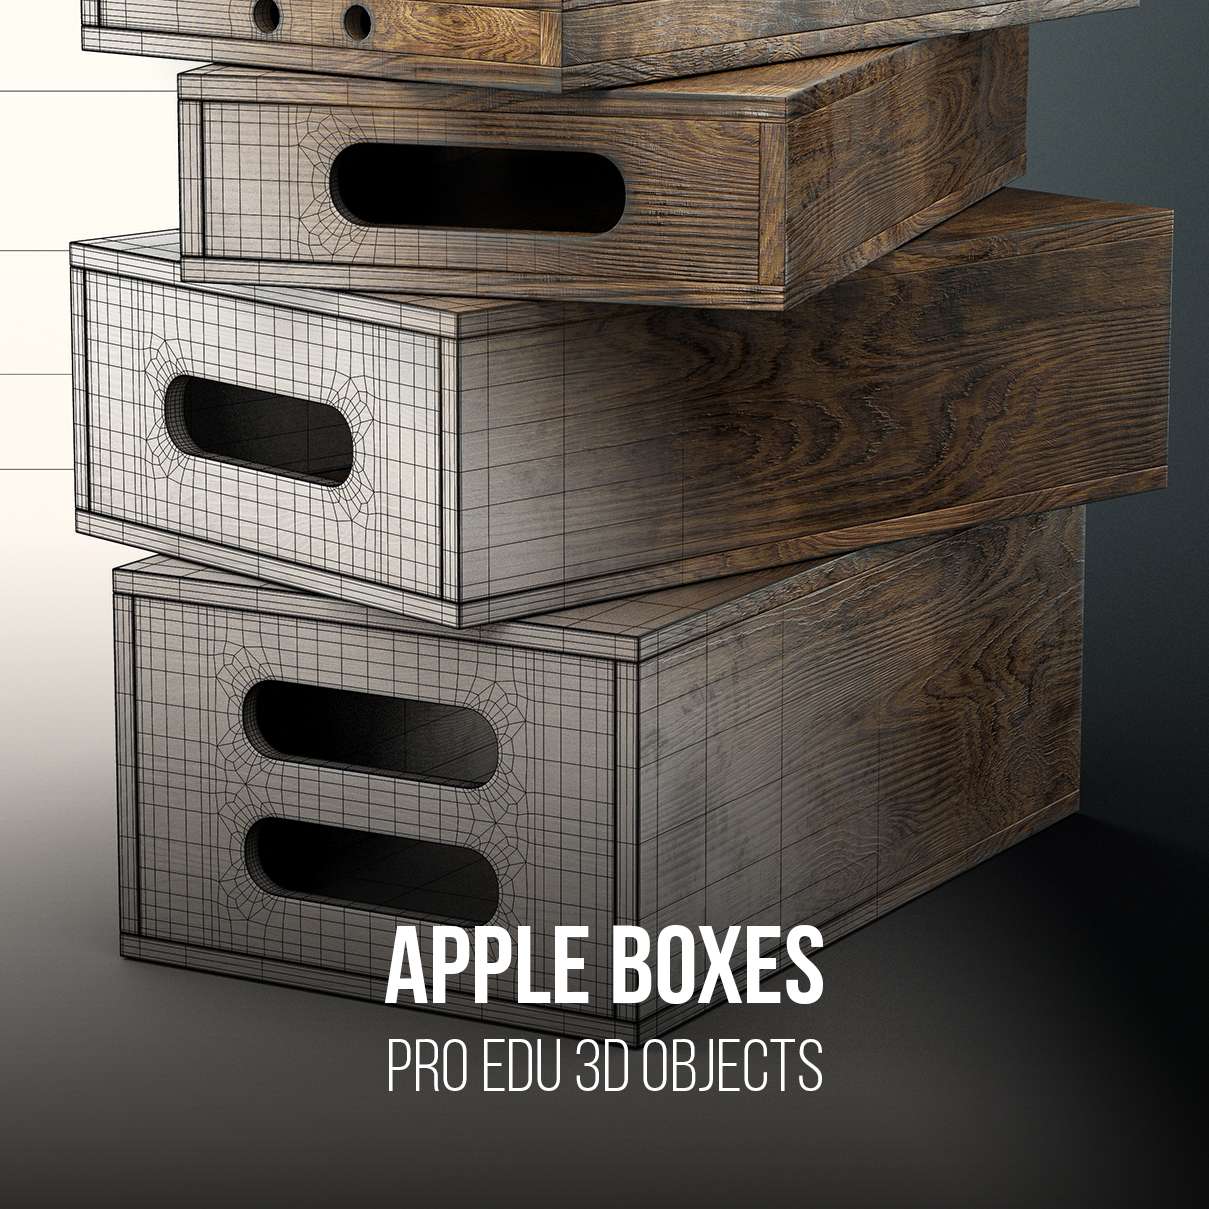 Apple Box Set 3D Model for Photoshop | C4D FBX OBJ CGI Asset - PRO EDU PRO EDU PRO EDU